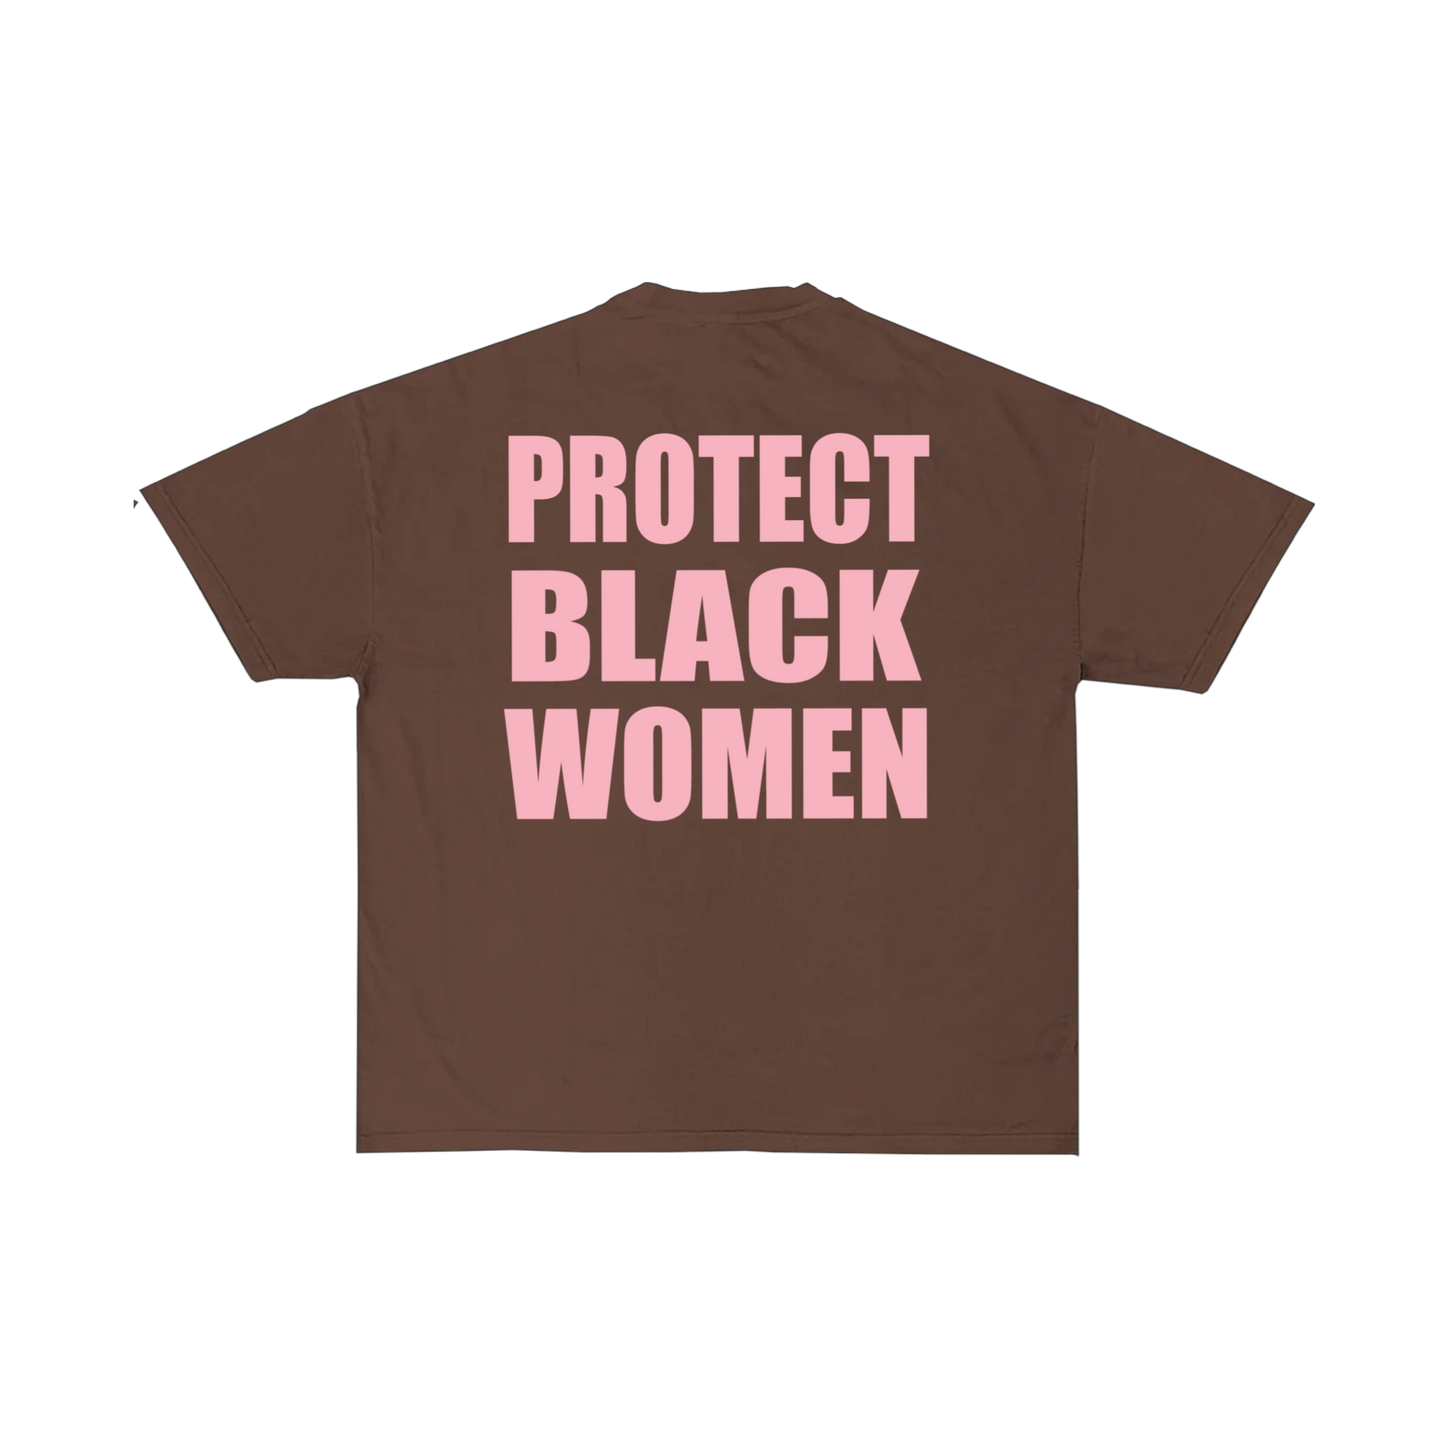 "PROTECT BLACK WOMEN" TEE